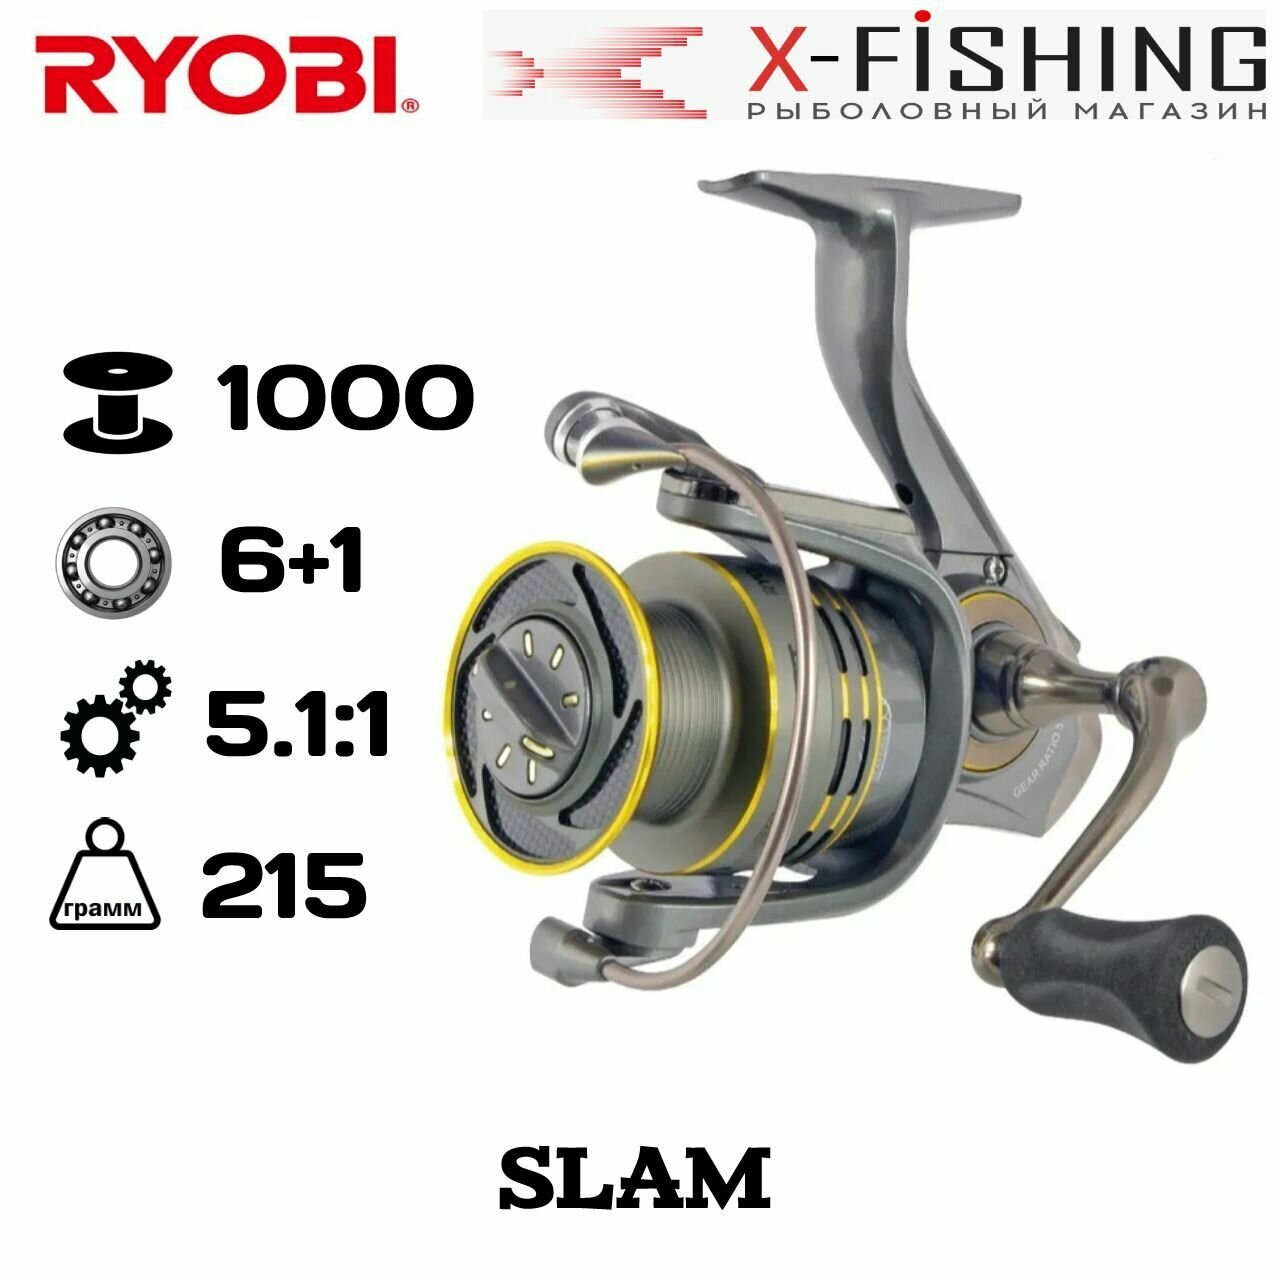 Катушка для рыбалки Ryobi Slam 1000